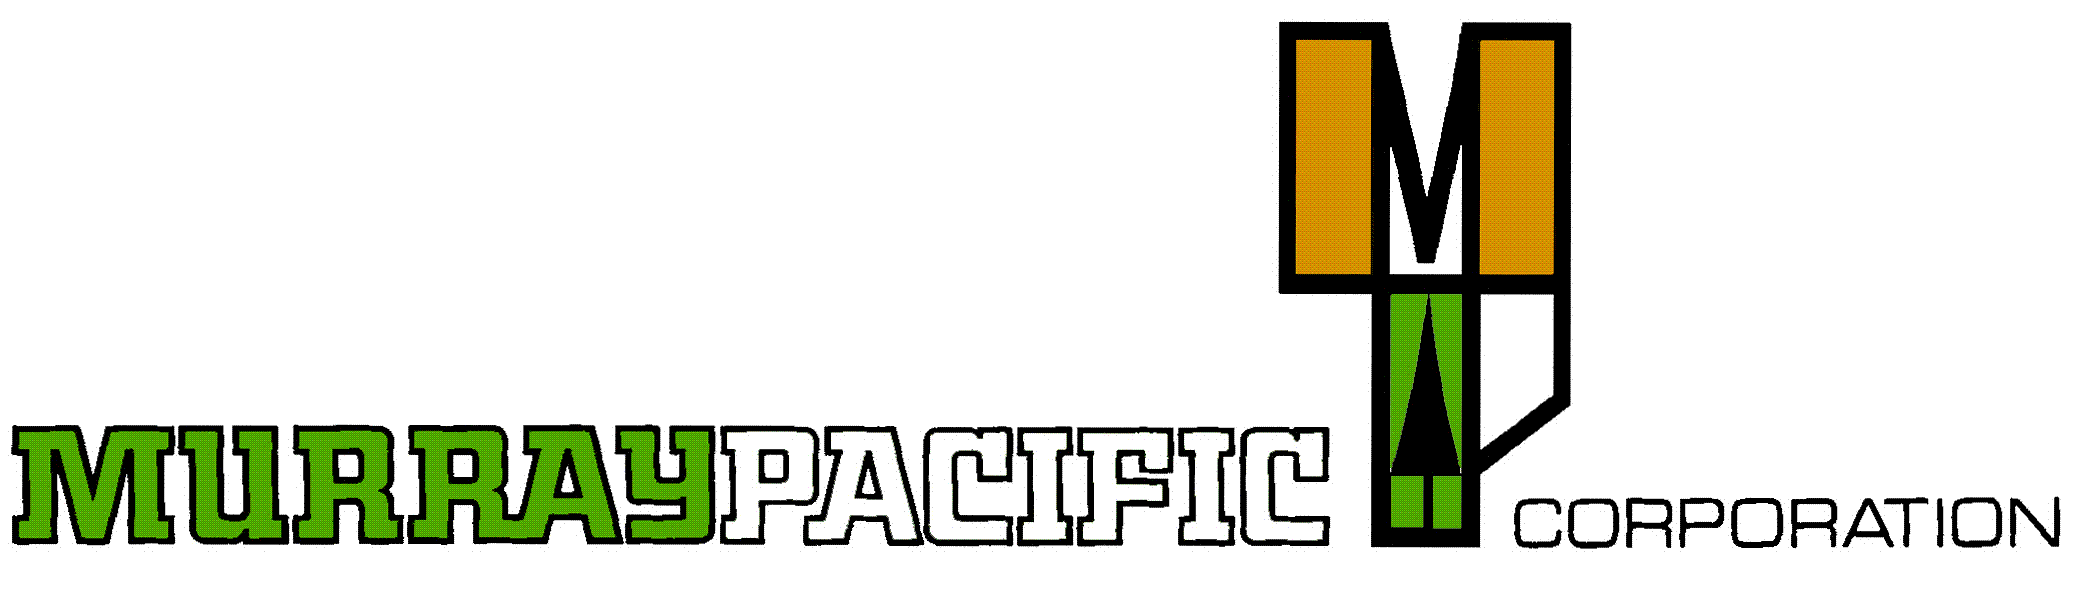 Murray Pacific Corporation